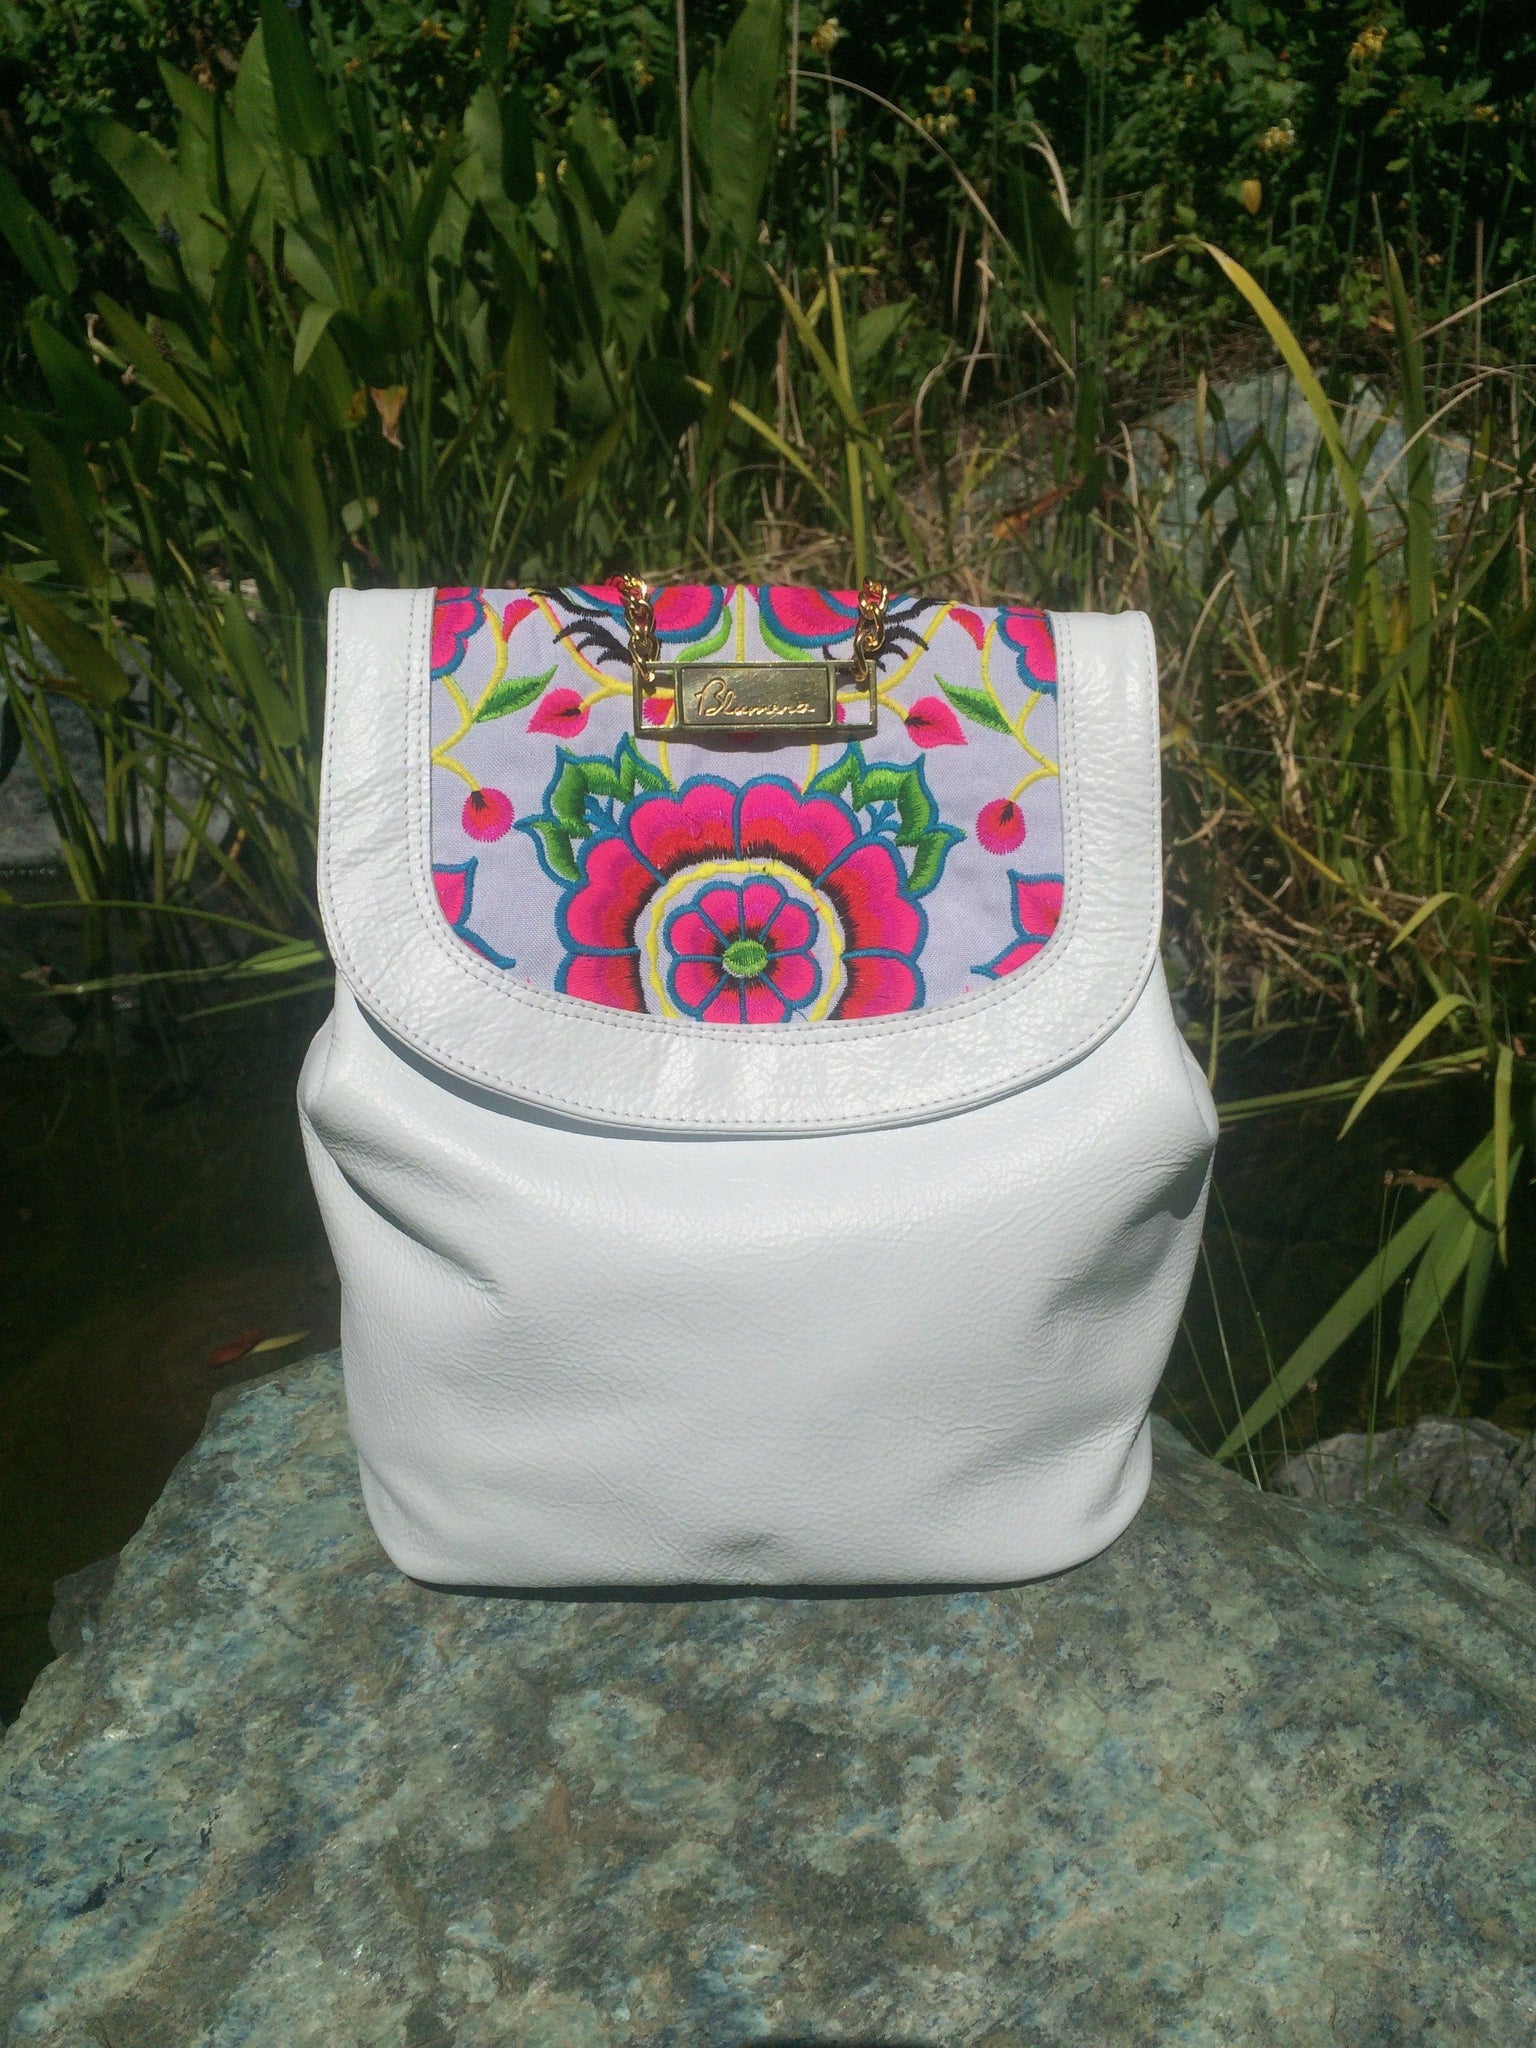 Nonny Black Embroidered Backpack - Blumera